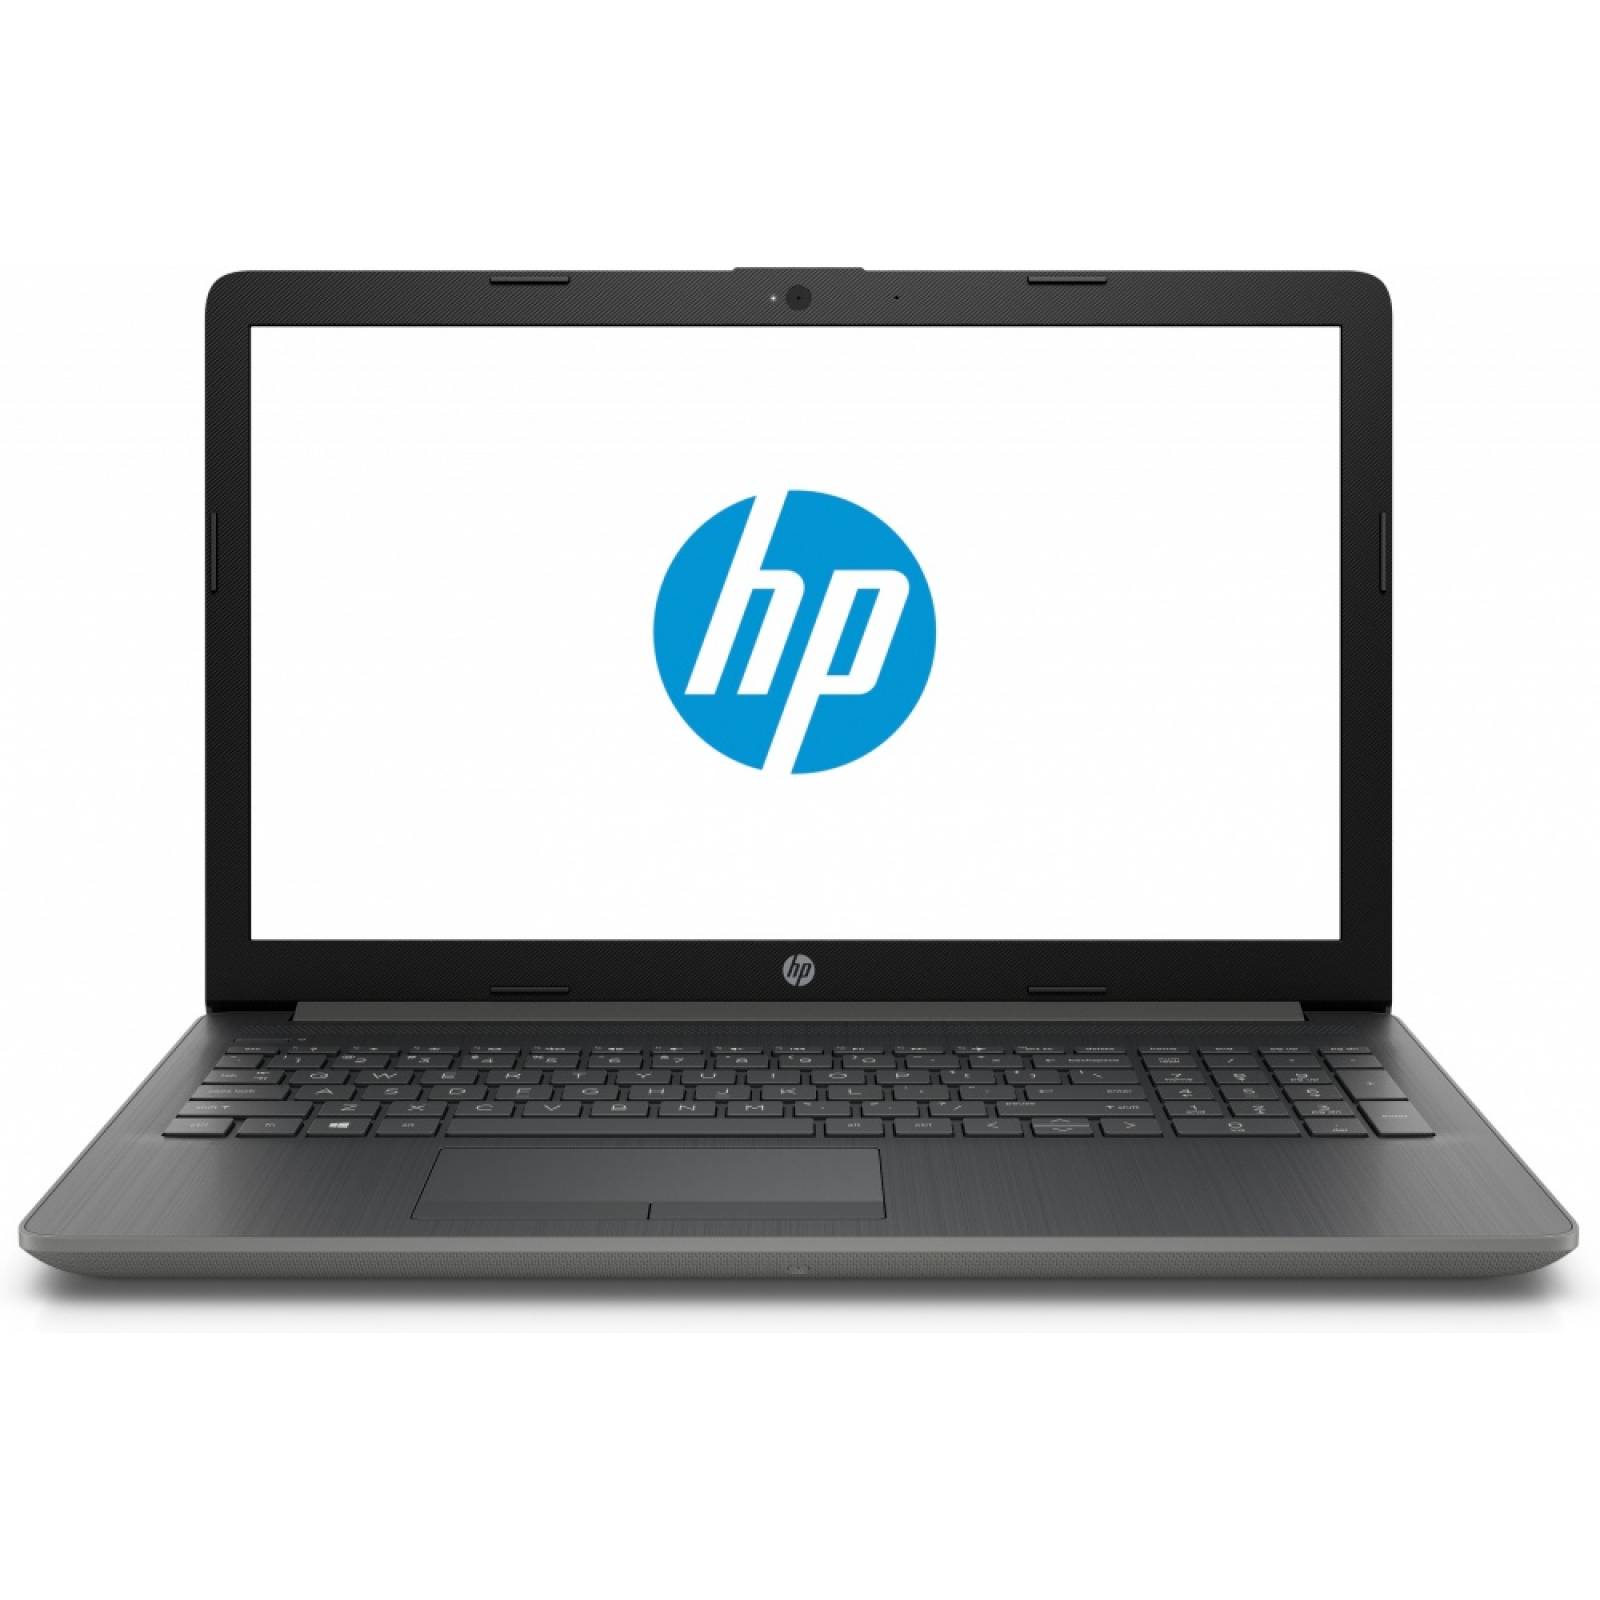 Laptop HP 15-da0085la+ Procesador Intel Celeron N4000 Memoria de 8GB DDR4 Disco Duro de 1TB Pantalla de 15.6 pulgadas LED Windows 10 Home